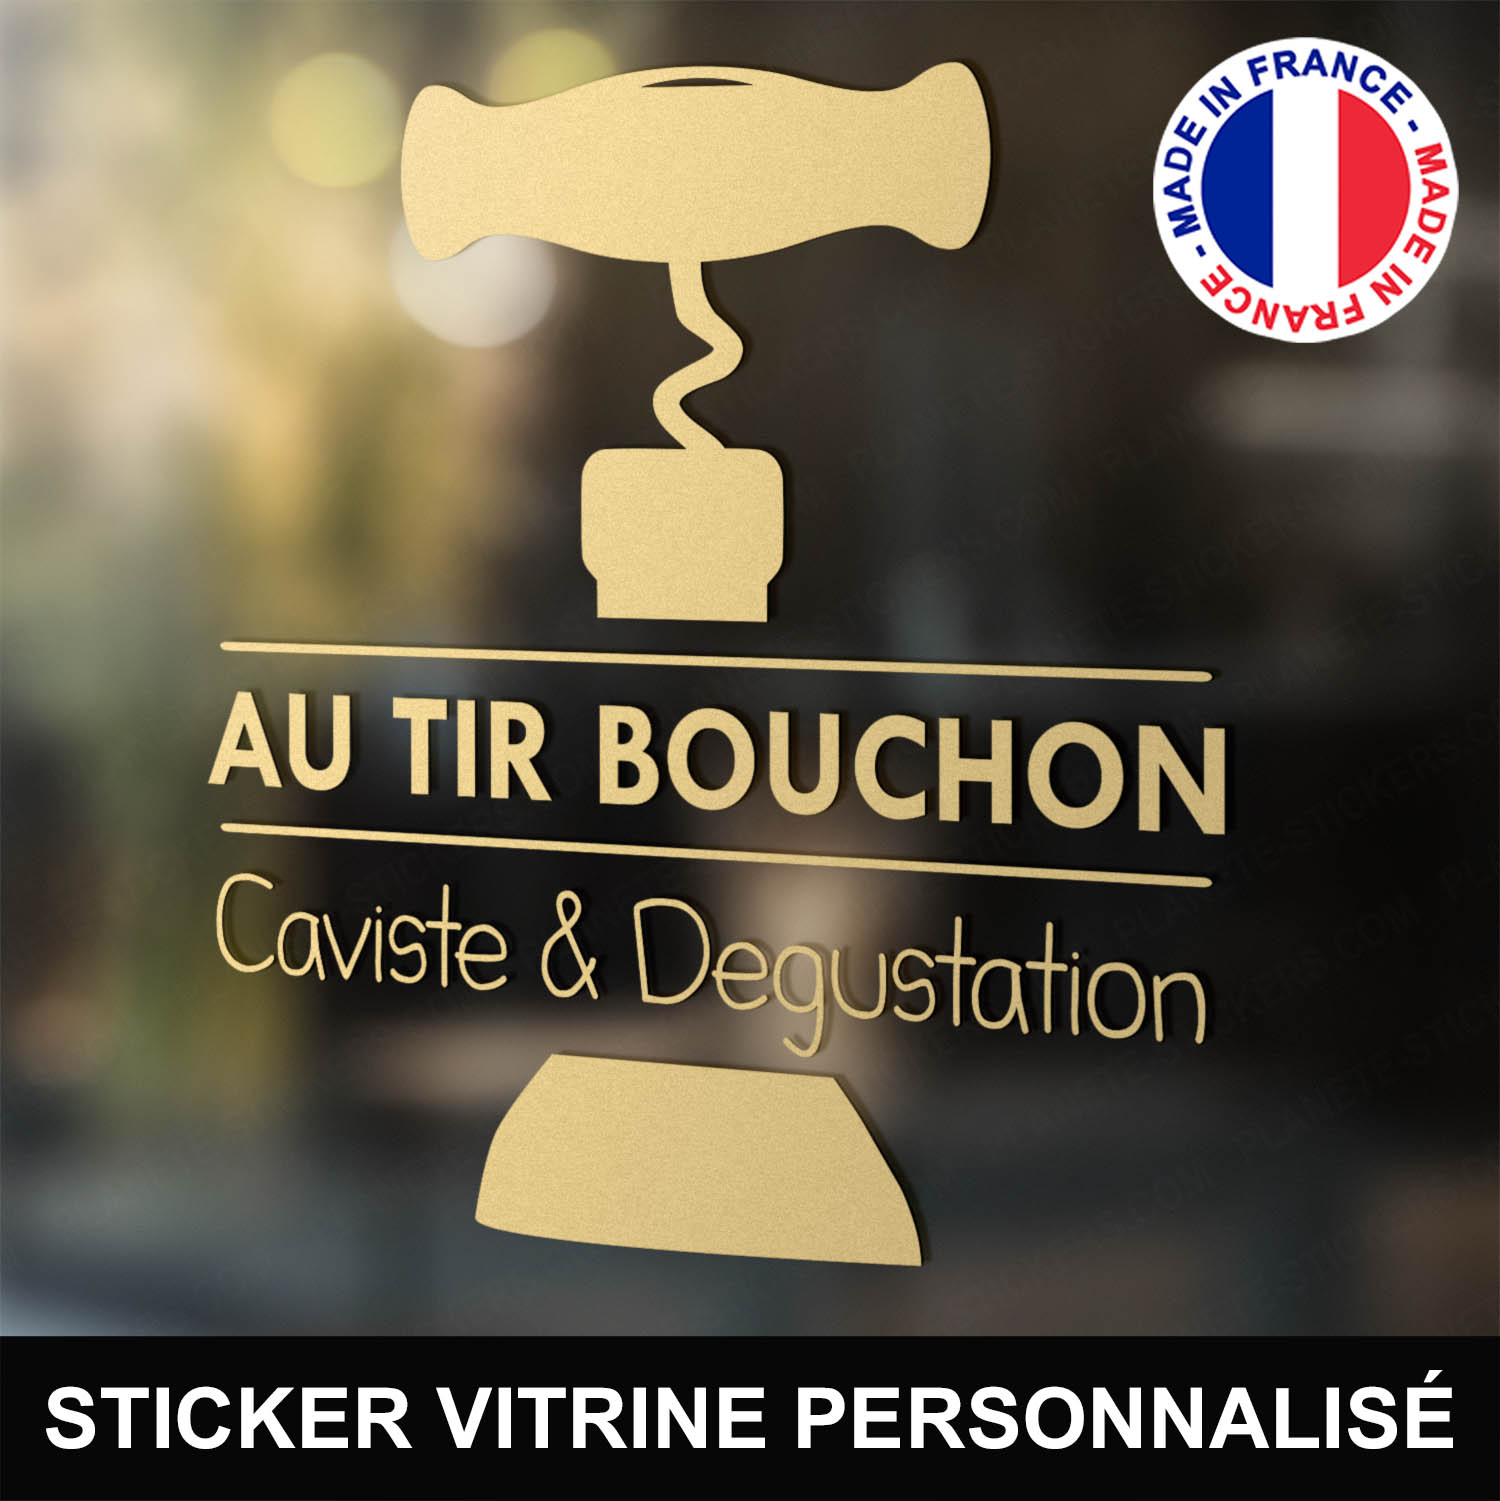 ref3cavistevitrine-stickers-caviste-vitrine-sticker-personnalisé-autocollant-vin-boutique-pro-degustation-tir-bouchon-professionnel